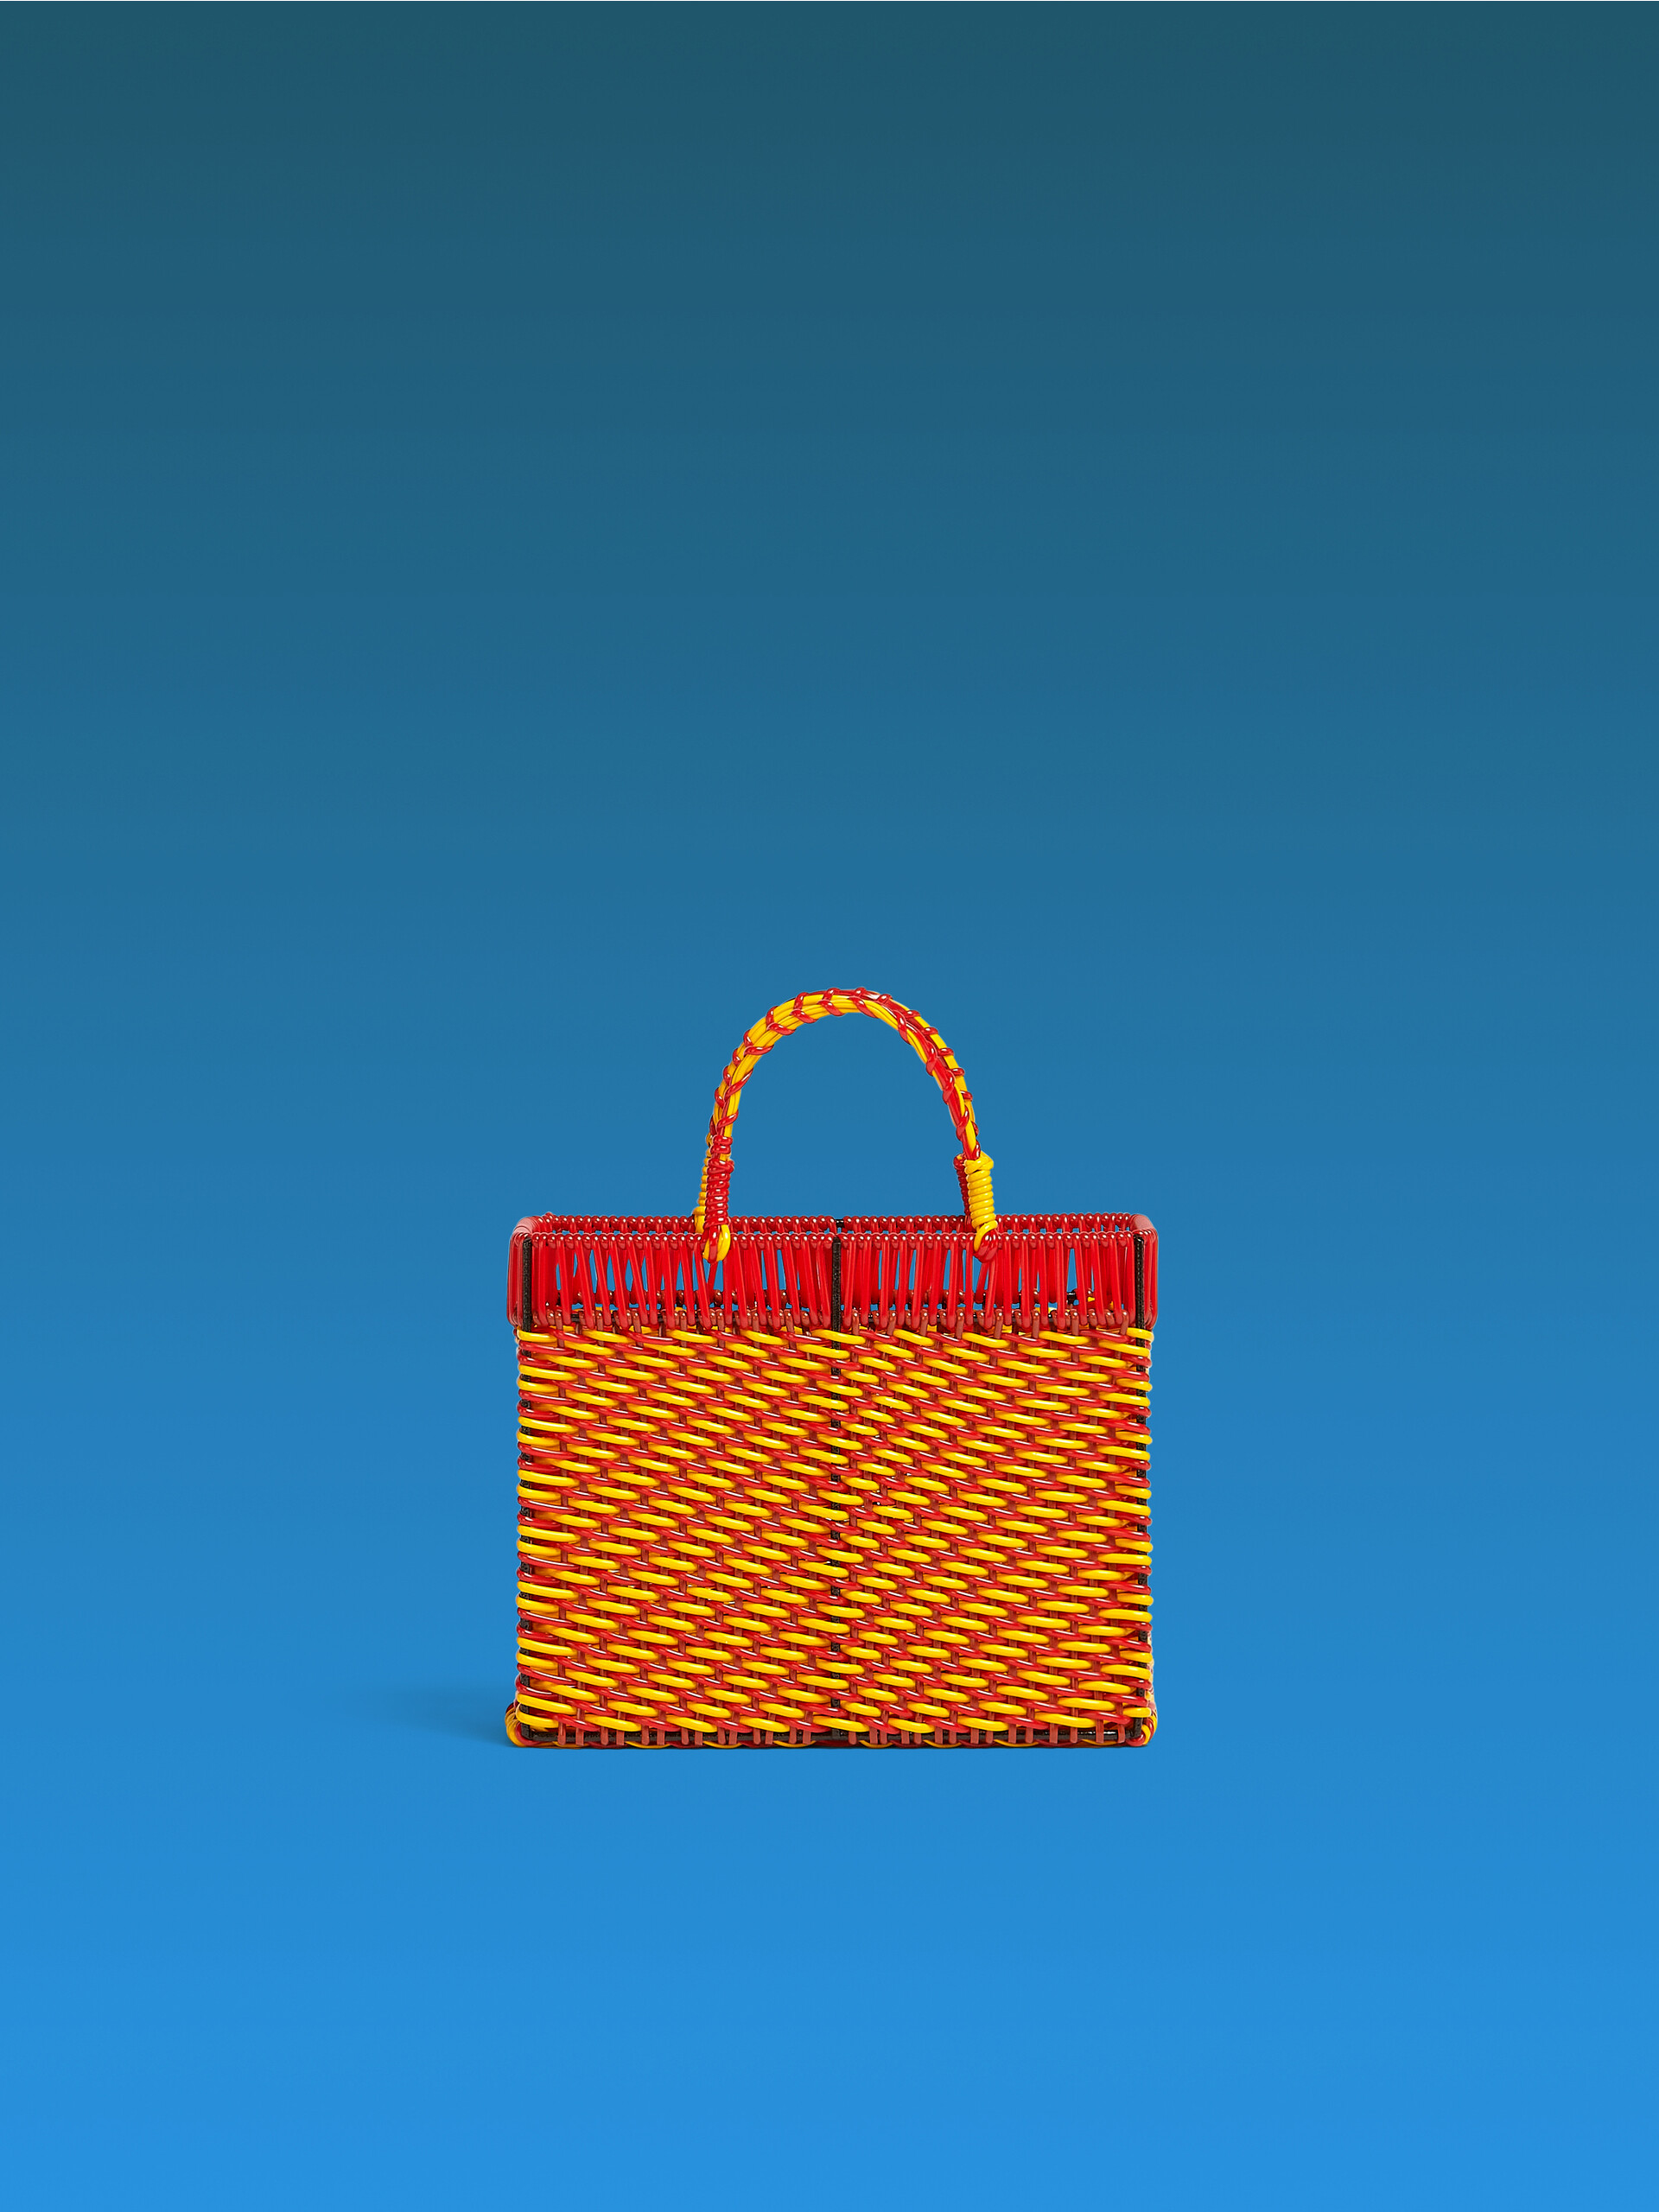 MARNI MARKET orange and red basket - Accessories - Image 1